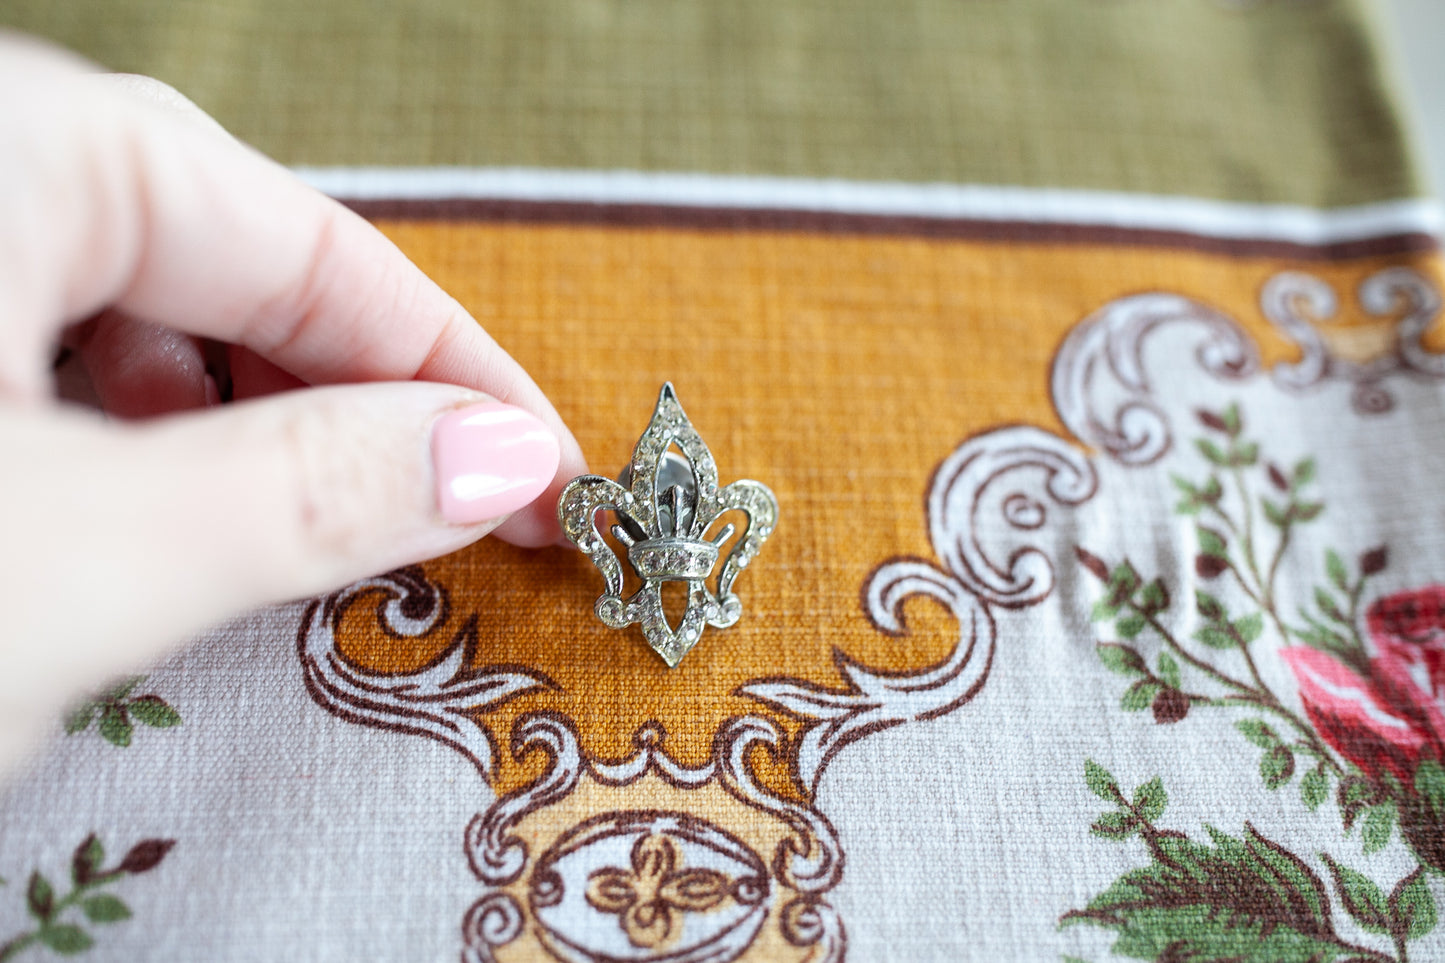 Fleur De Lis Lapel Pin - Vintage Pin -Brooch